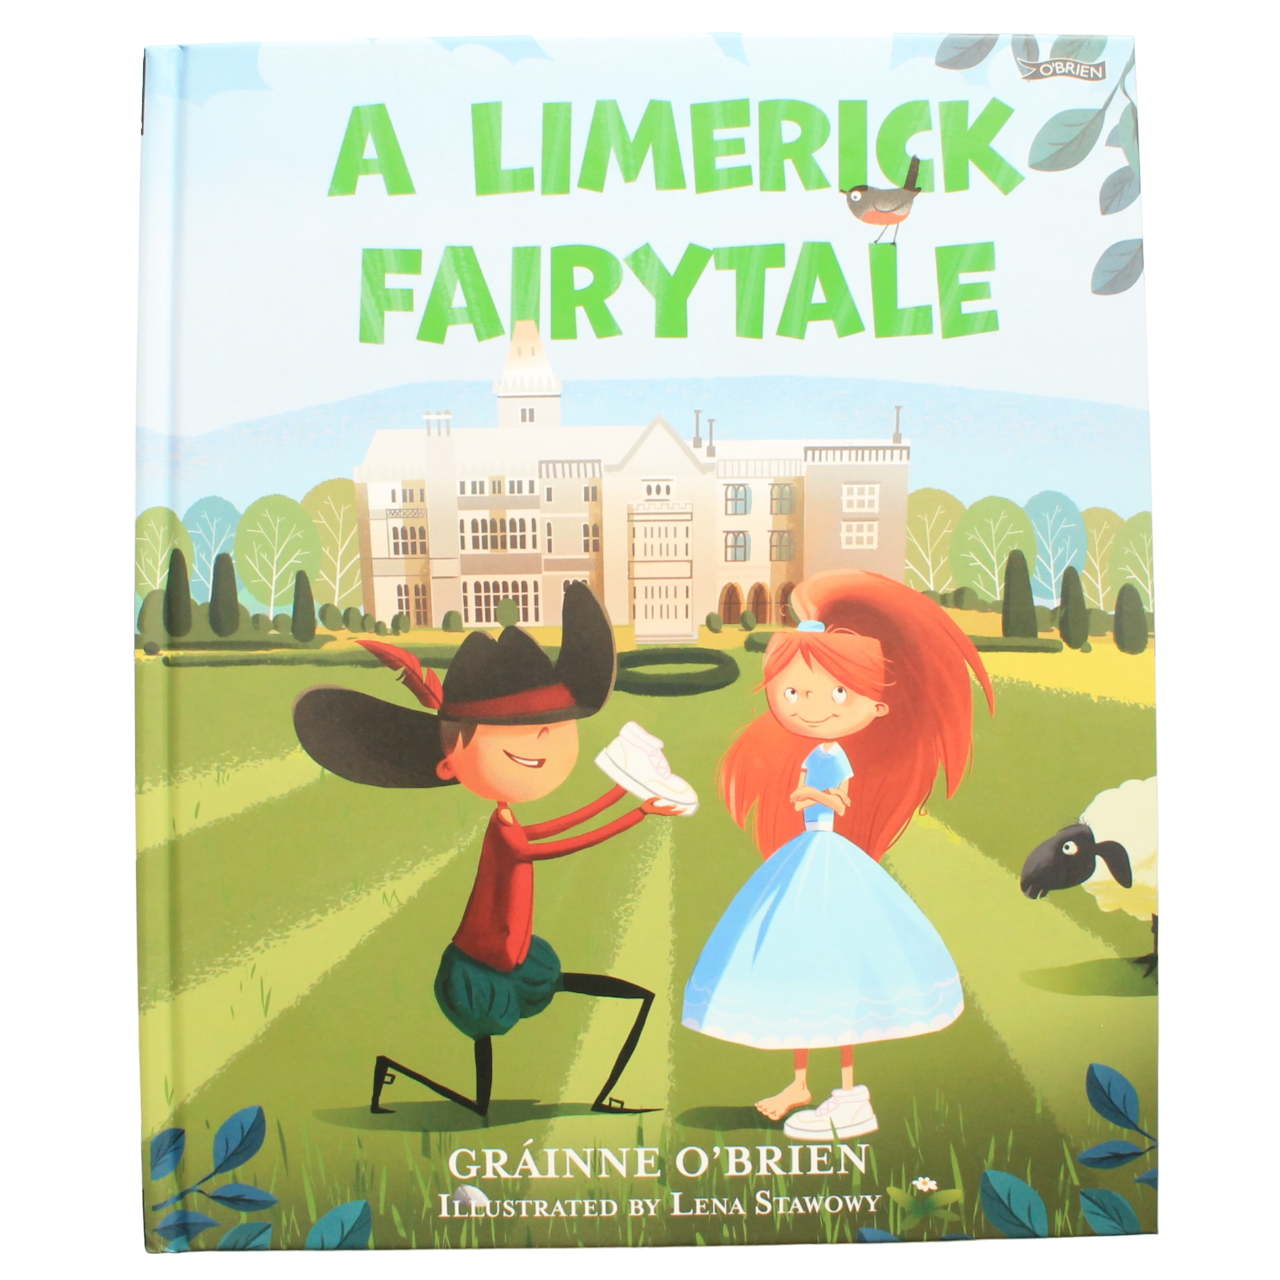 A Limerick Fairytale - Grainne O'Brien